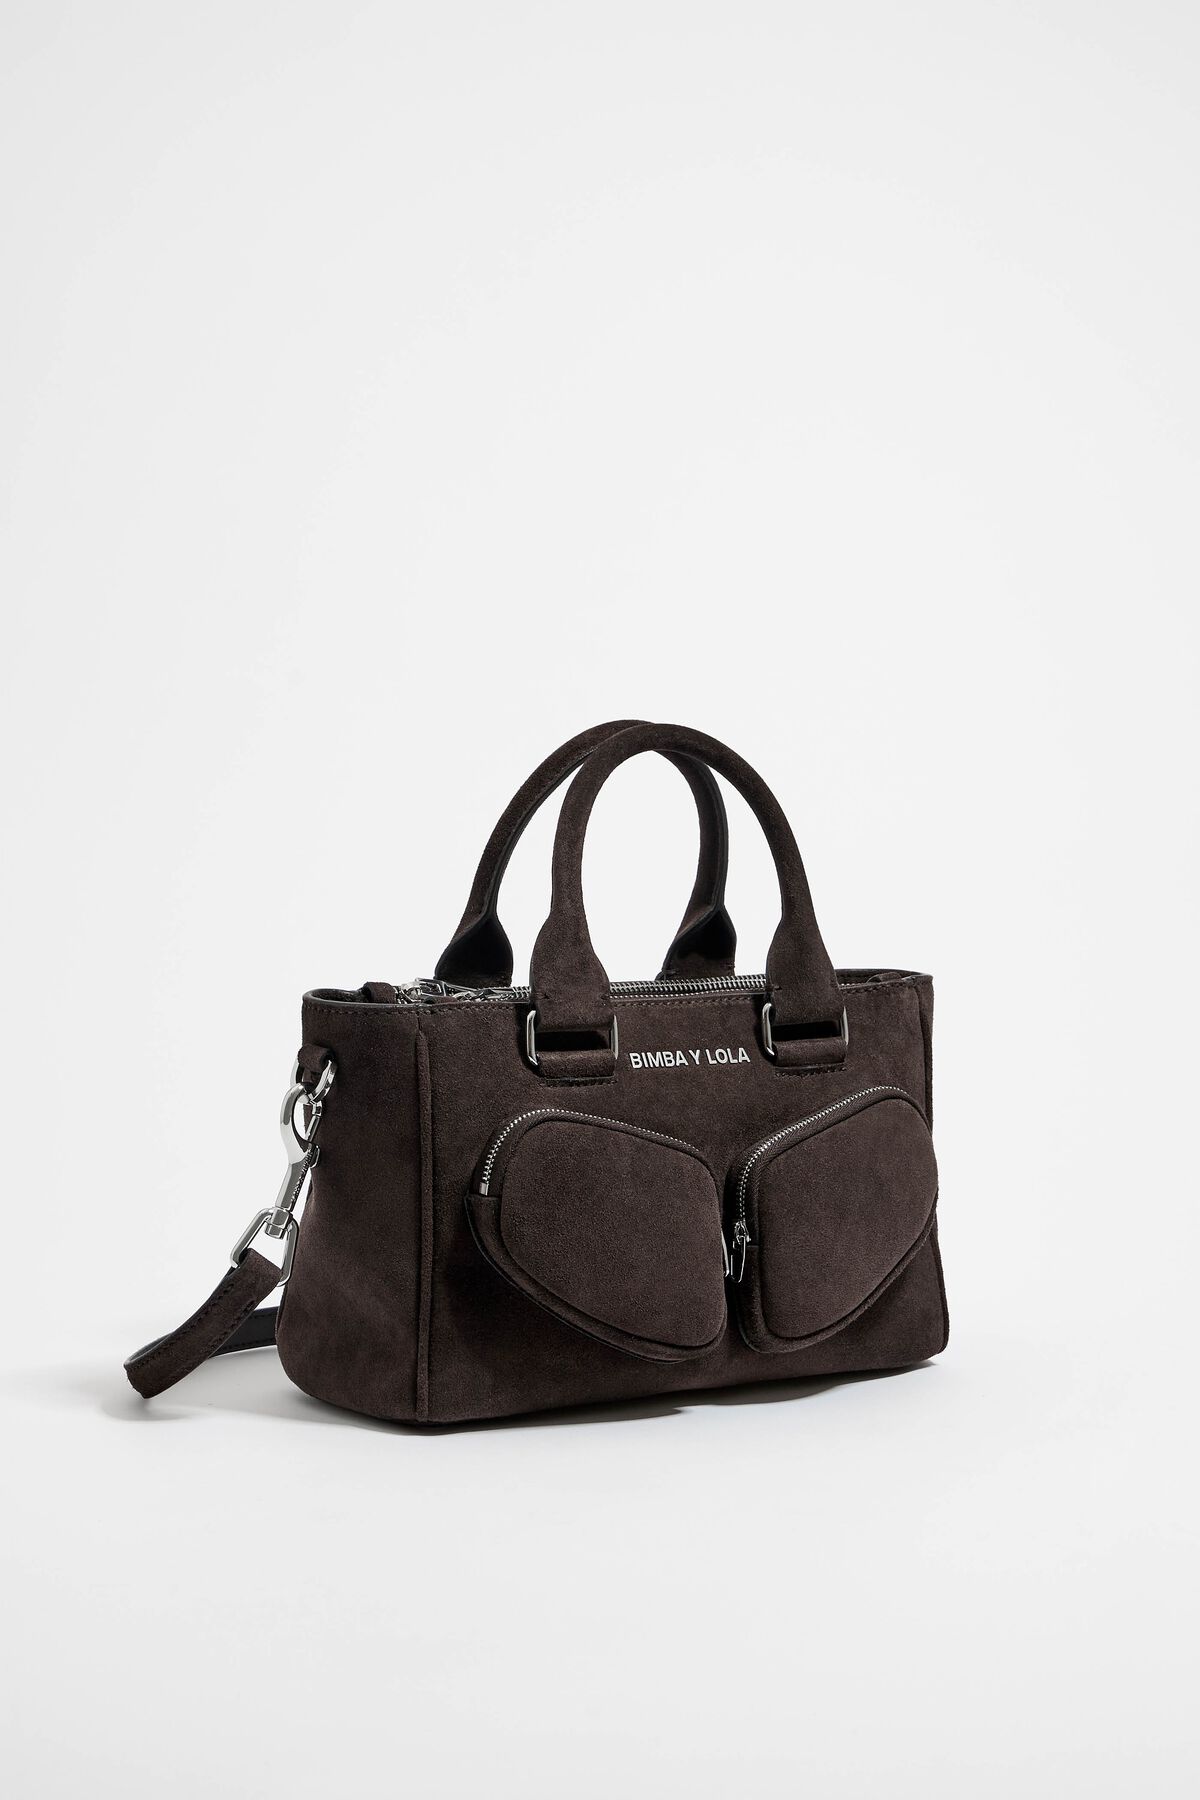 Bimba y Lola medium Pocket leather tote bag, Grey